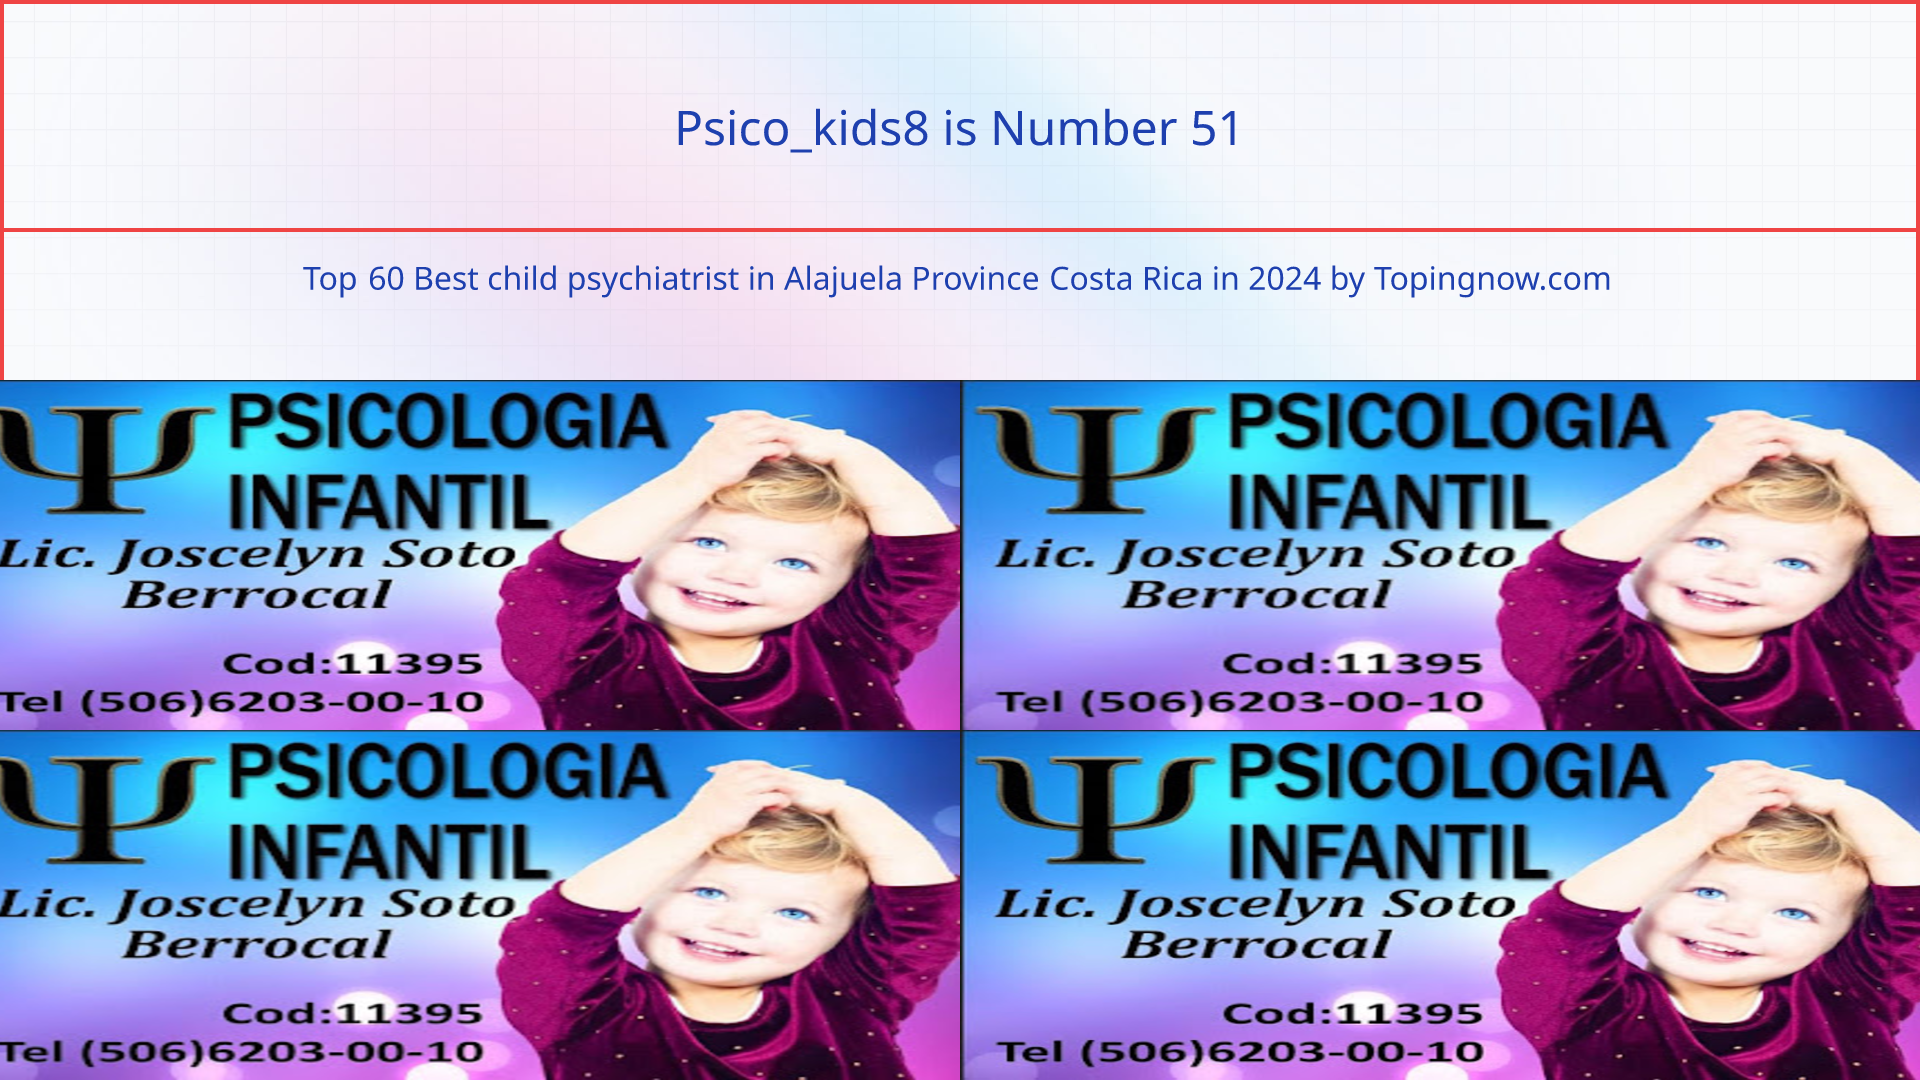 Psico_kids8: Top 60 Best child psychiatrist in Alajuela Province Costa Rica in 2024